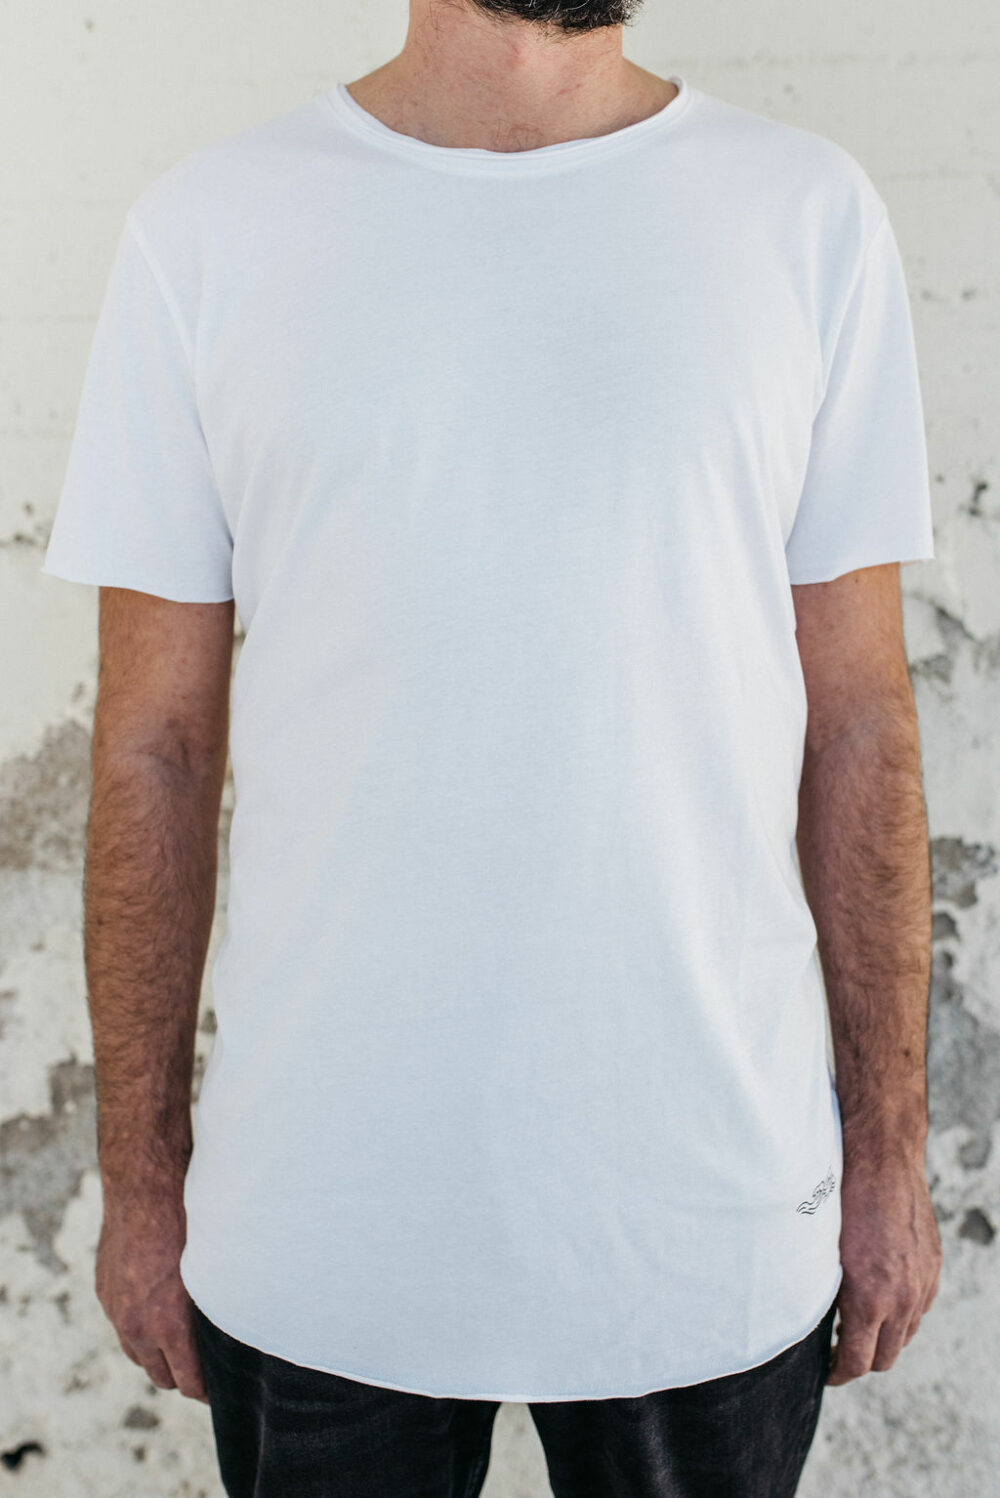 Camiseta blanca unisex. Moda orgánica y gallega